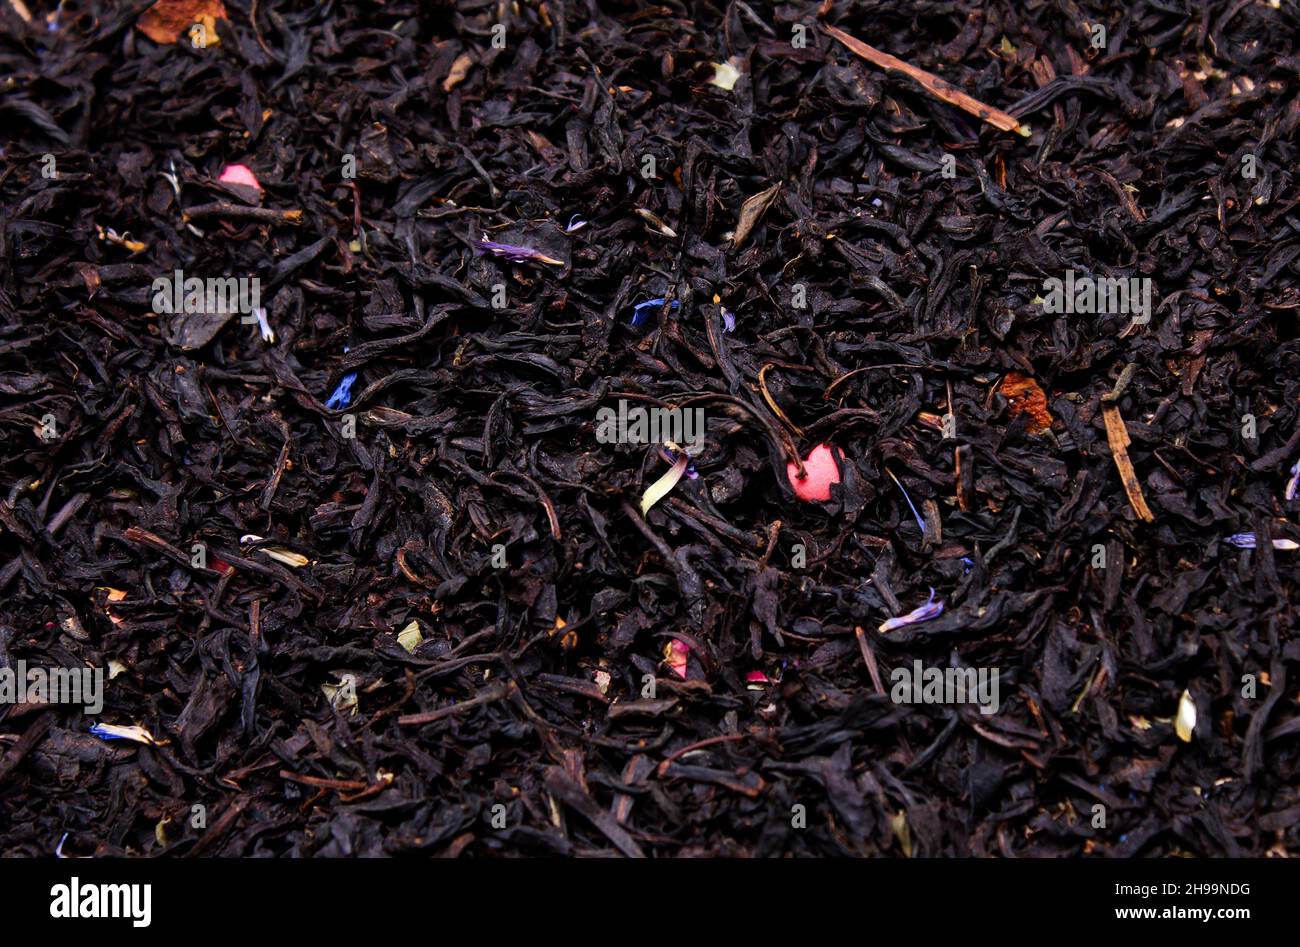 black leaf tea with flower petals close-up, drink Stock Photo